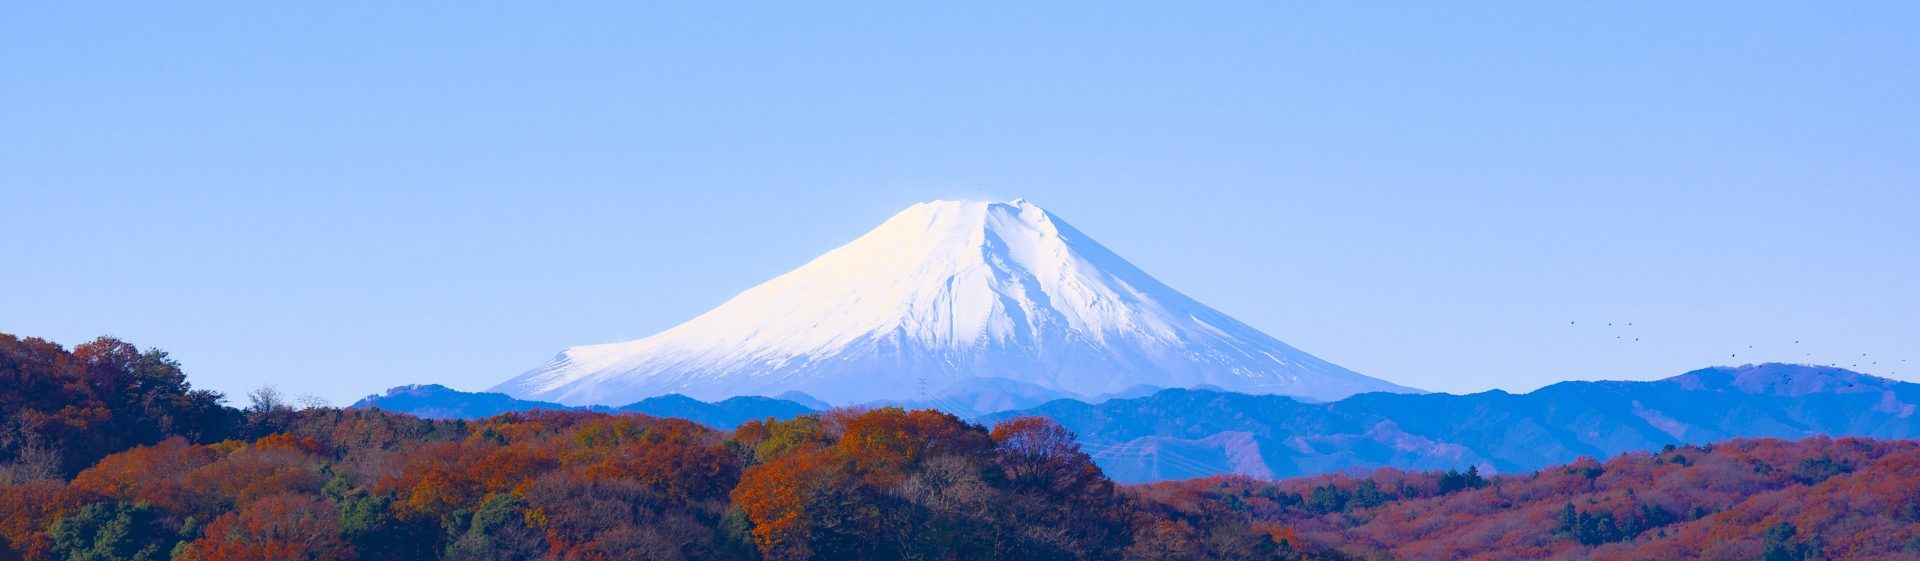 fuji-mountain-1